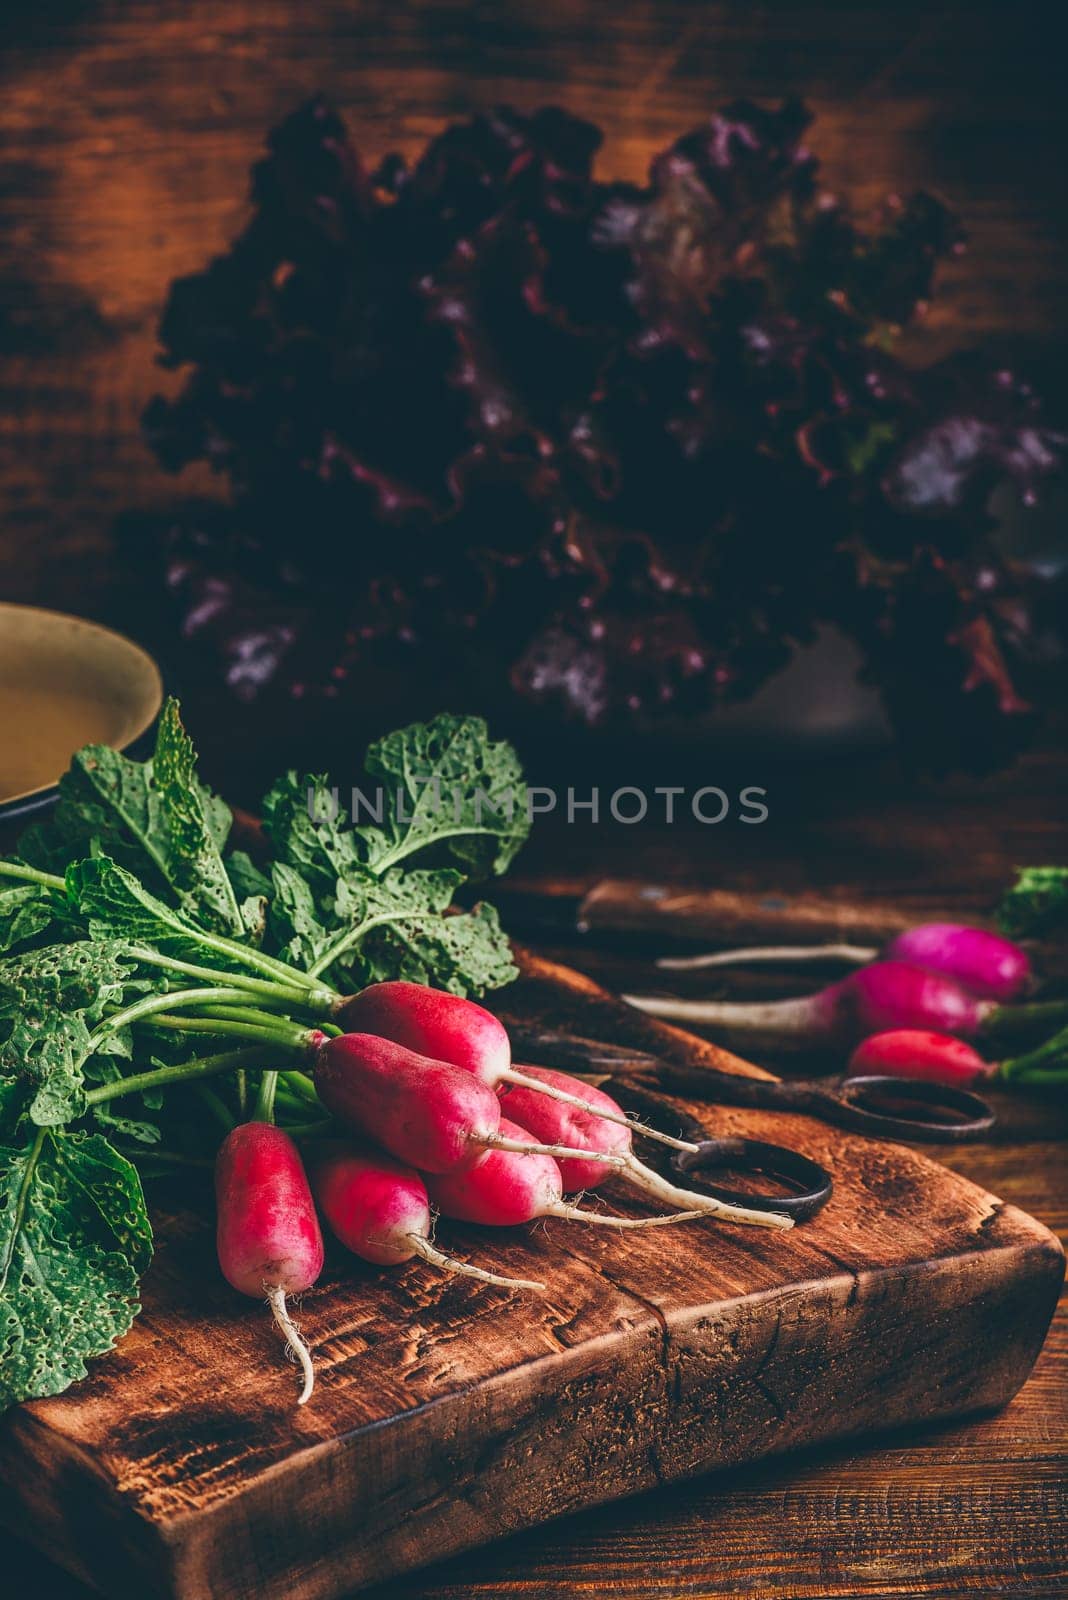 Red radish on cutting board by Seva_blsv